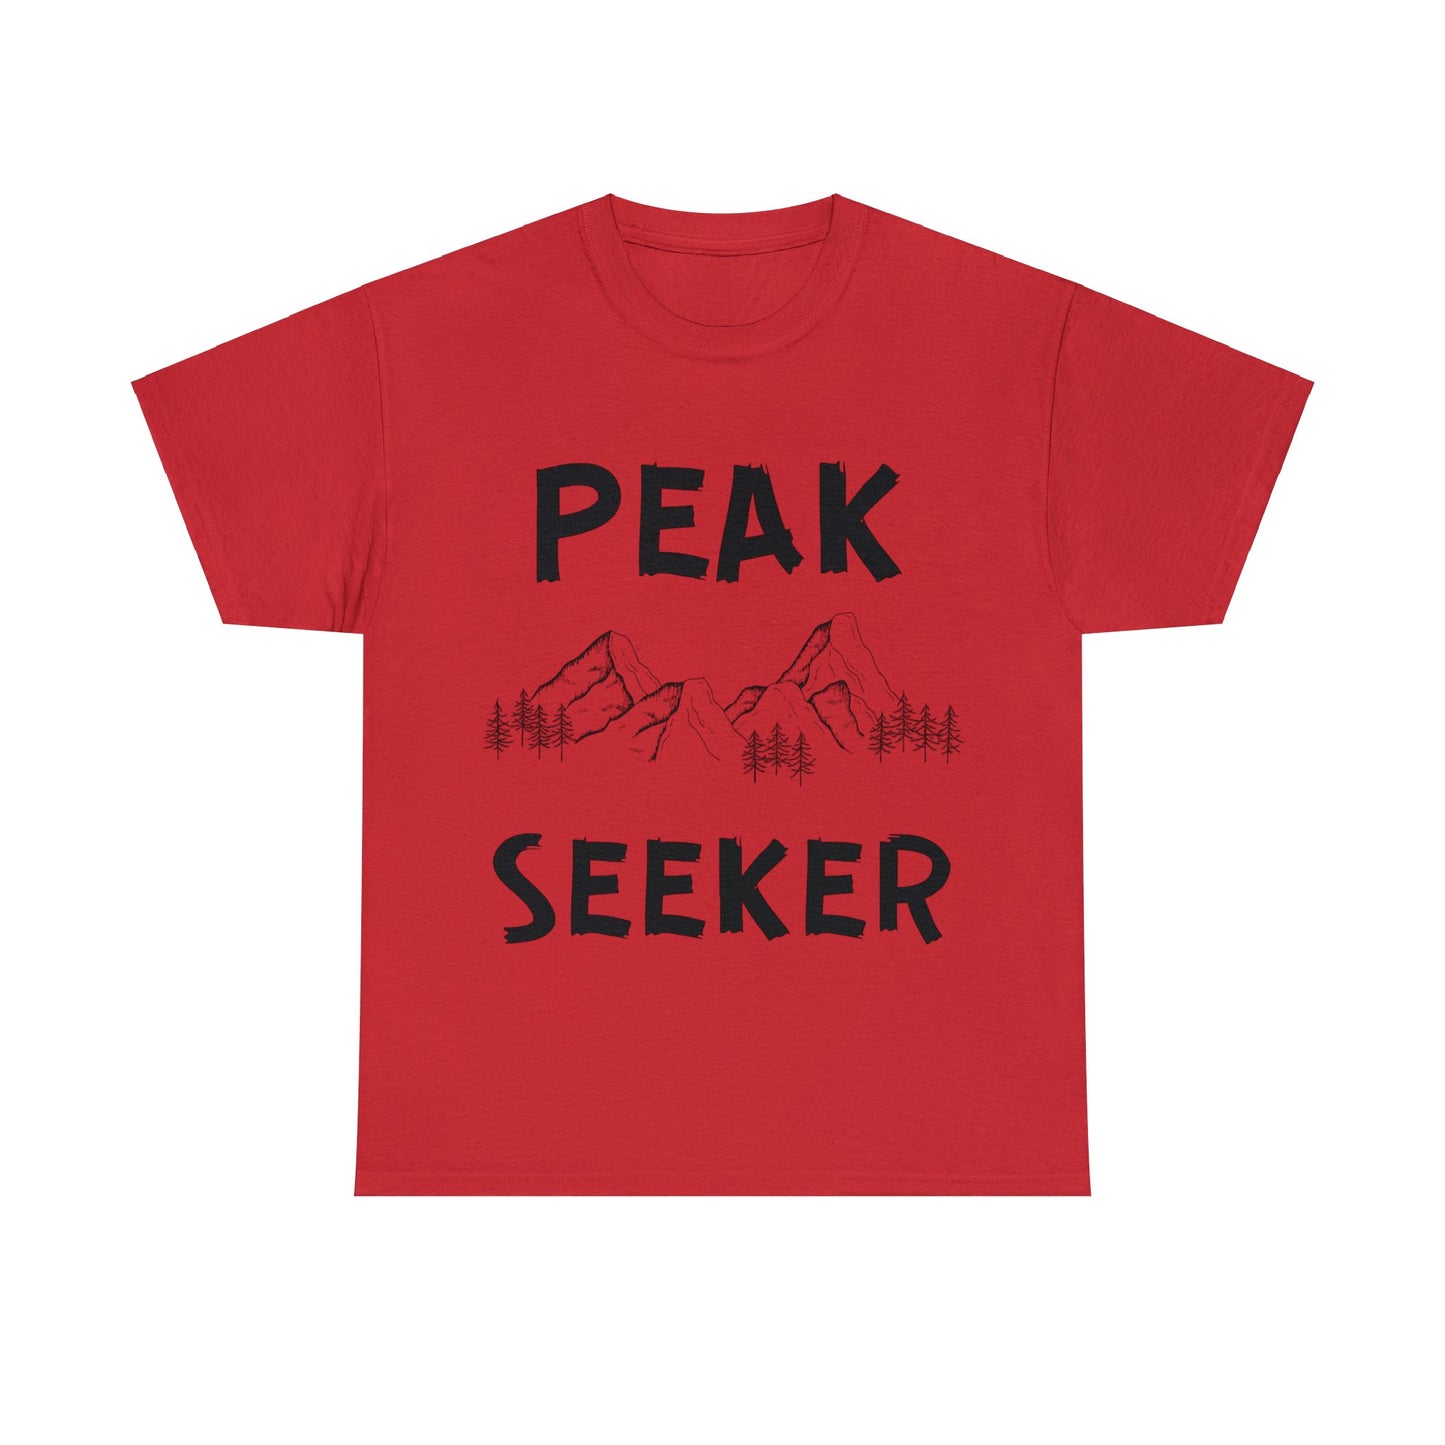 Peak Seeker Loves Mountains - NOT SOLD IN STORES - Hiker, Trekker, Adventurer, Hiking, Trekking, Adventure, Mountain Climber T-Shirt